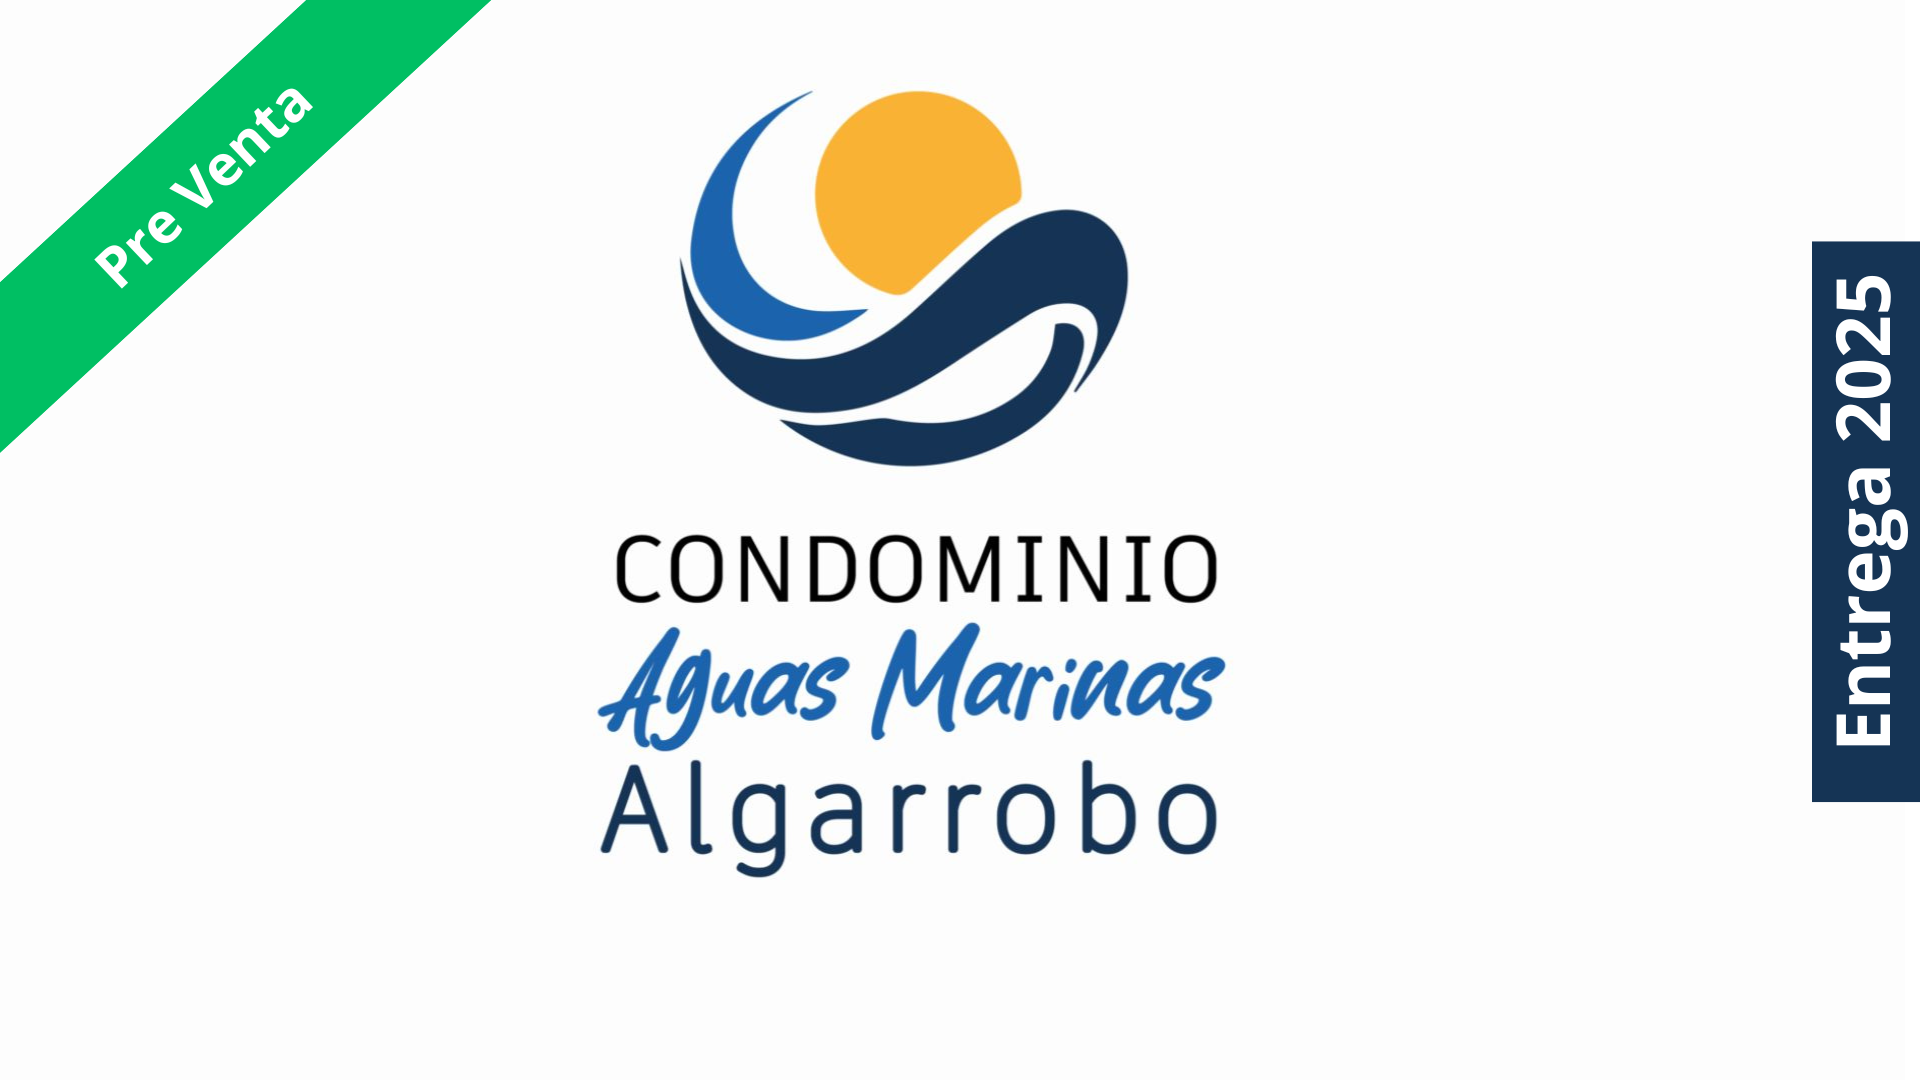 Condominio Aguas Marinas de Algarrobo